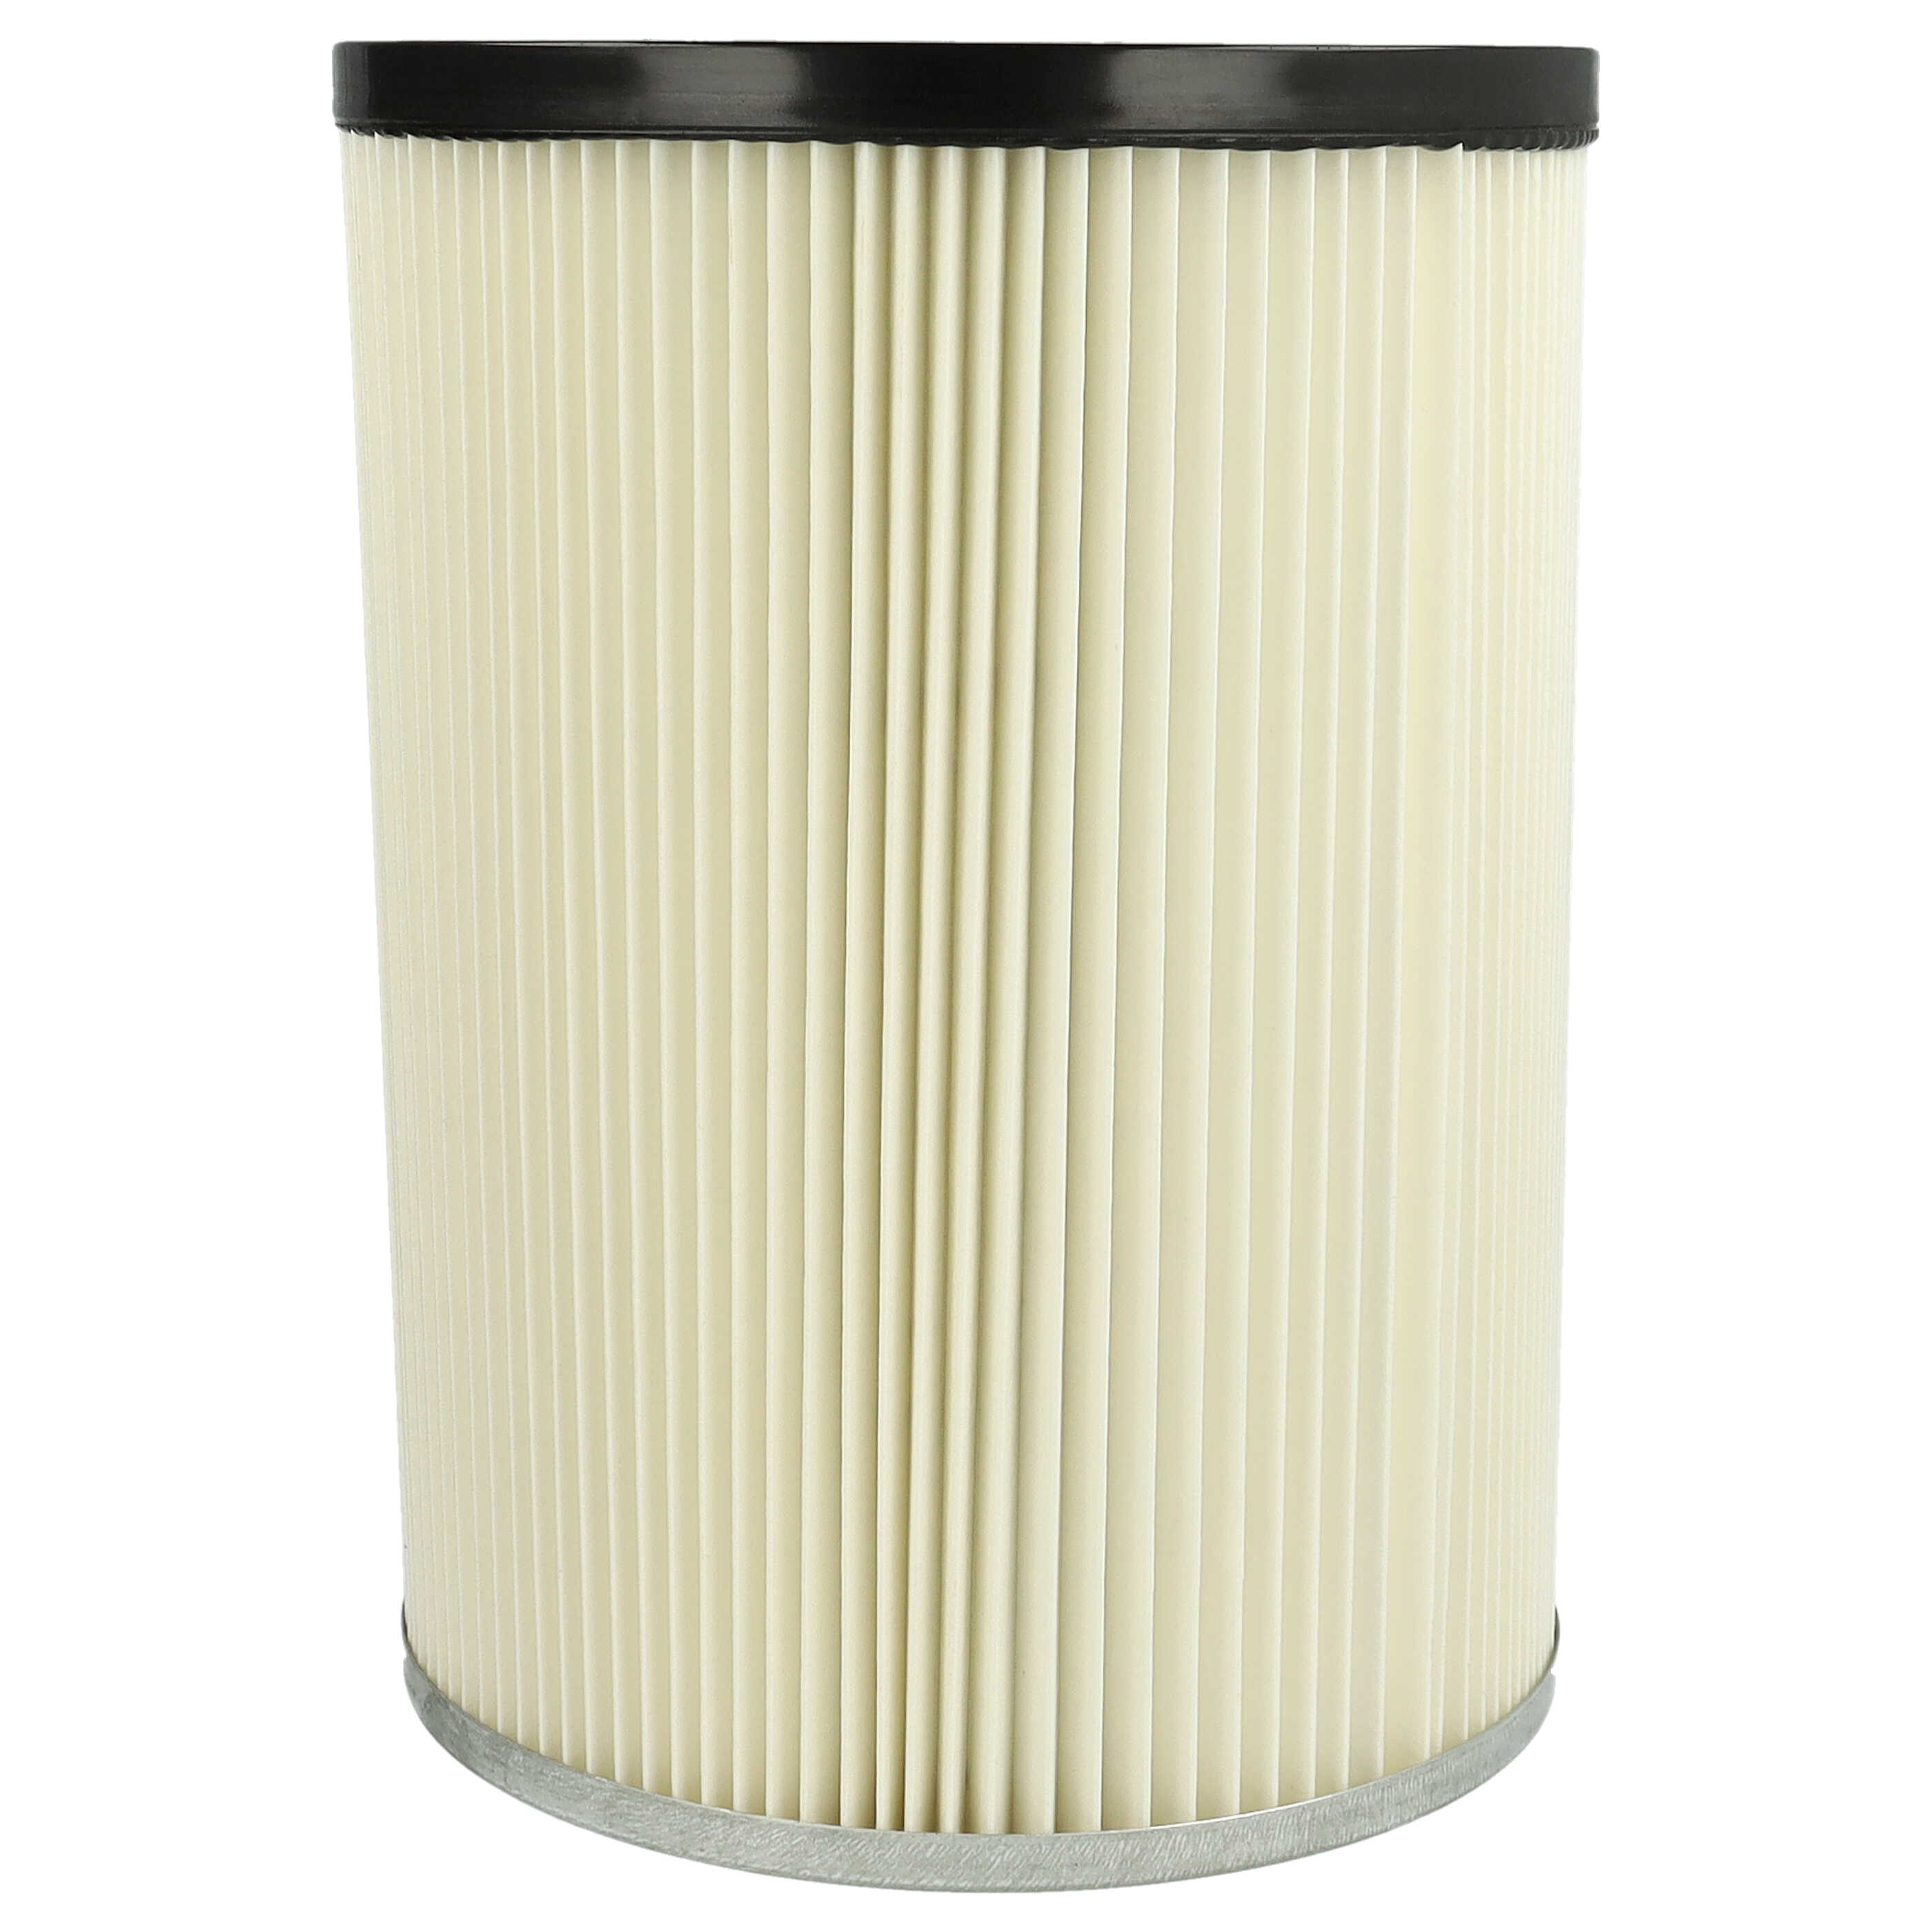 1x cartridge filter replaces Kärcher 6.904-325.0, 6.904-048.0 for KärcherVacuum Cleaner, white